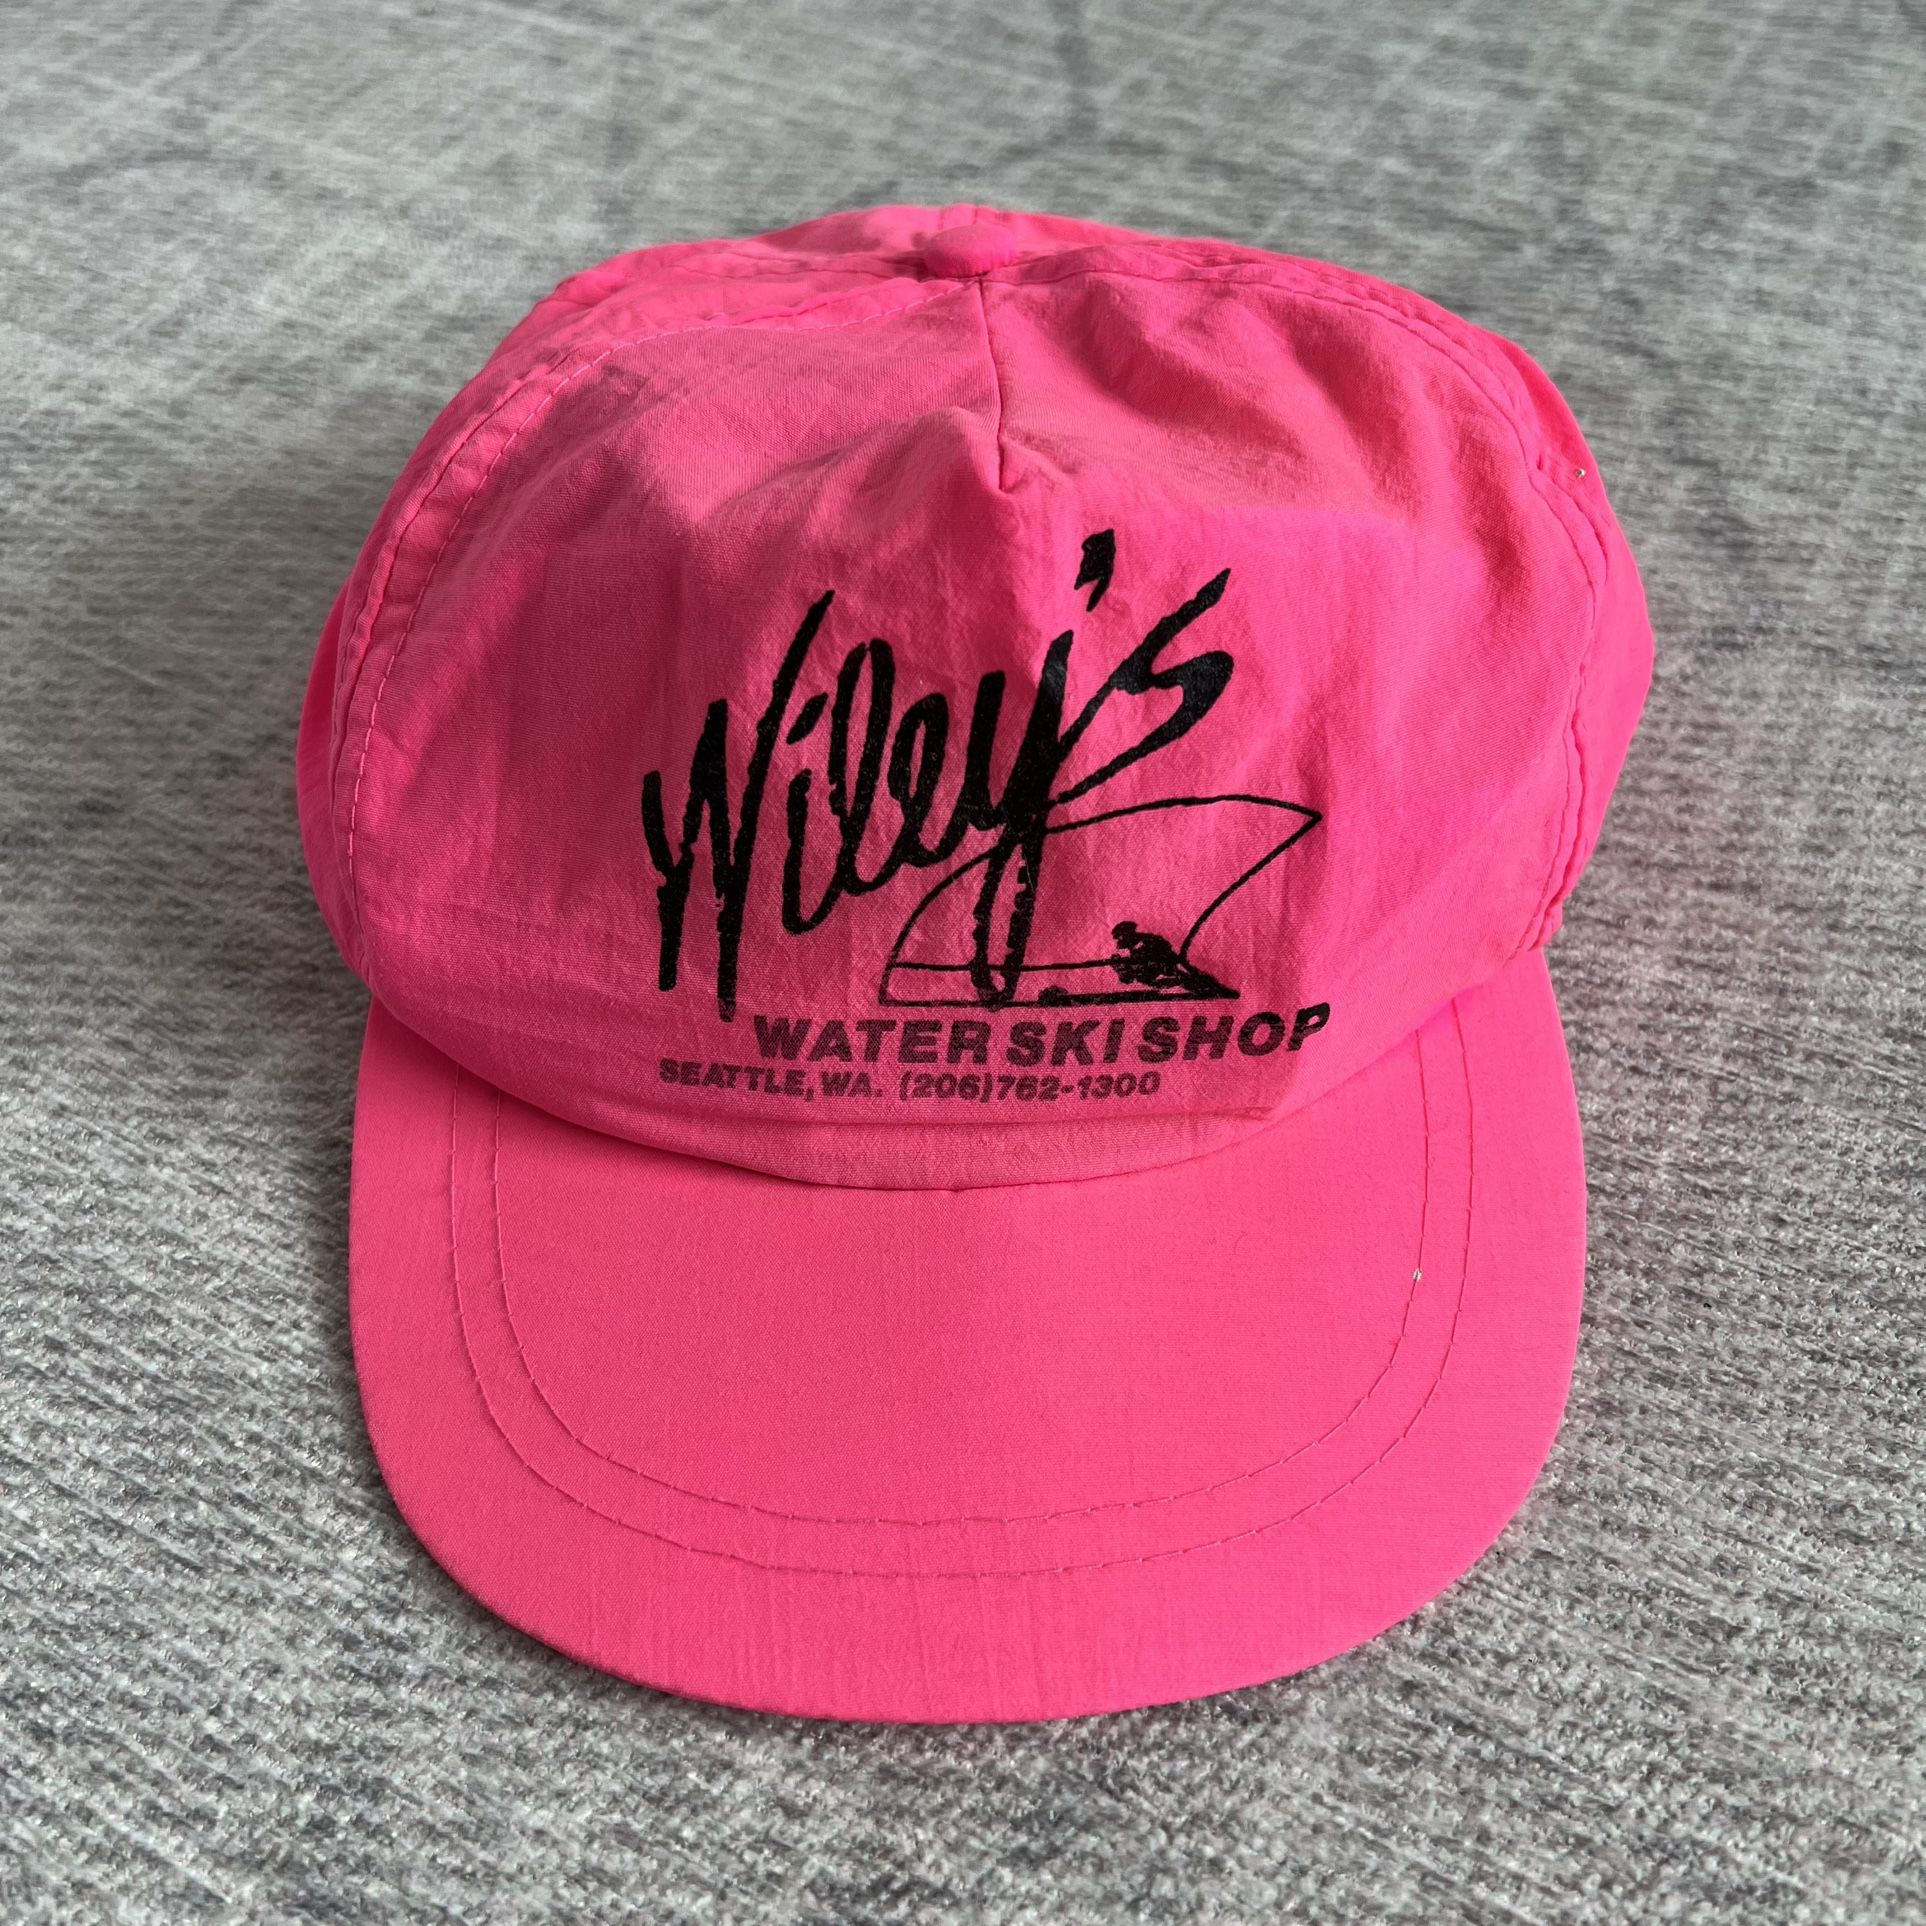 Vintage 1990s Wiley’s Water Ski Shop Seattle Summer Neon Pink Nylon Hat